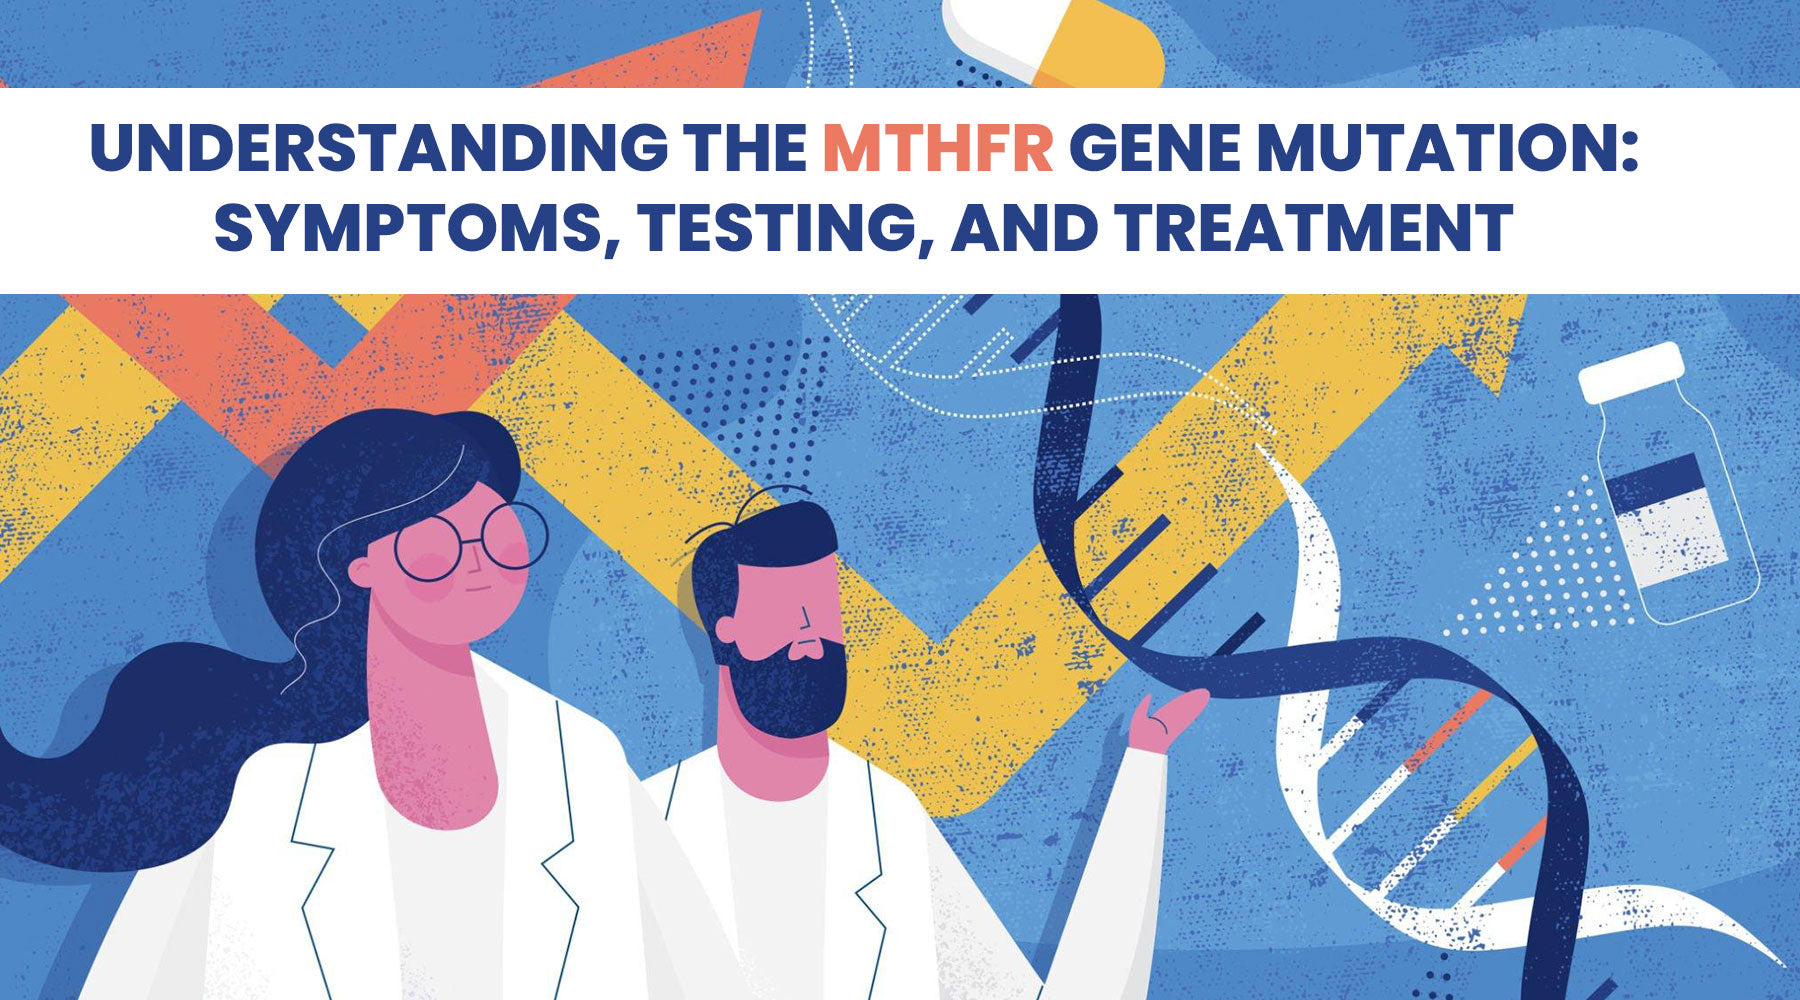 MTHFR GENE MUTATION